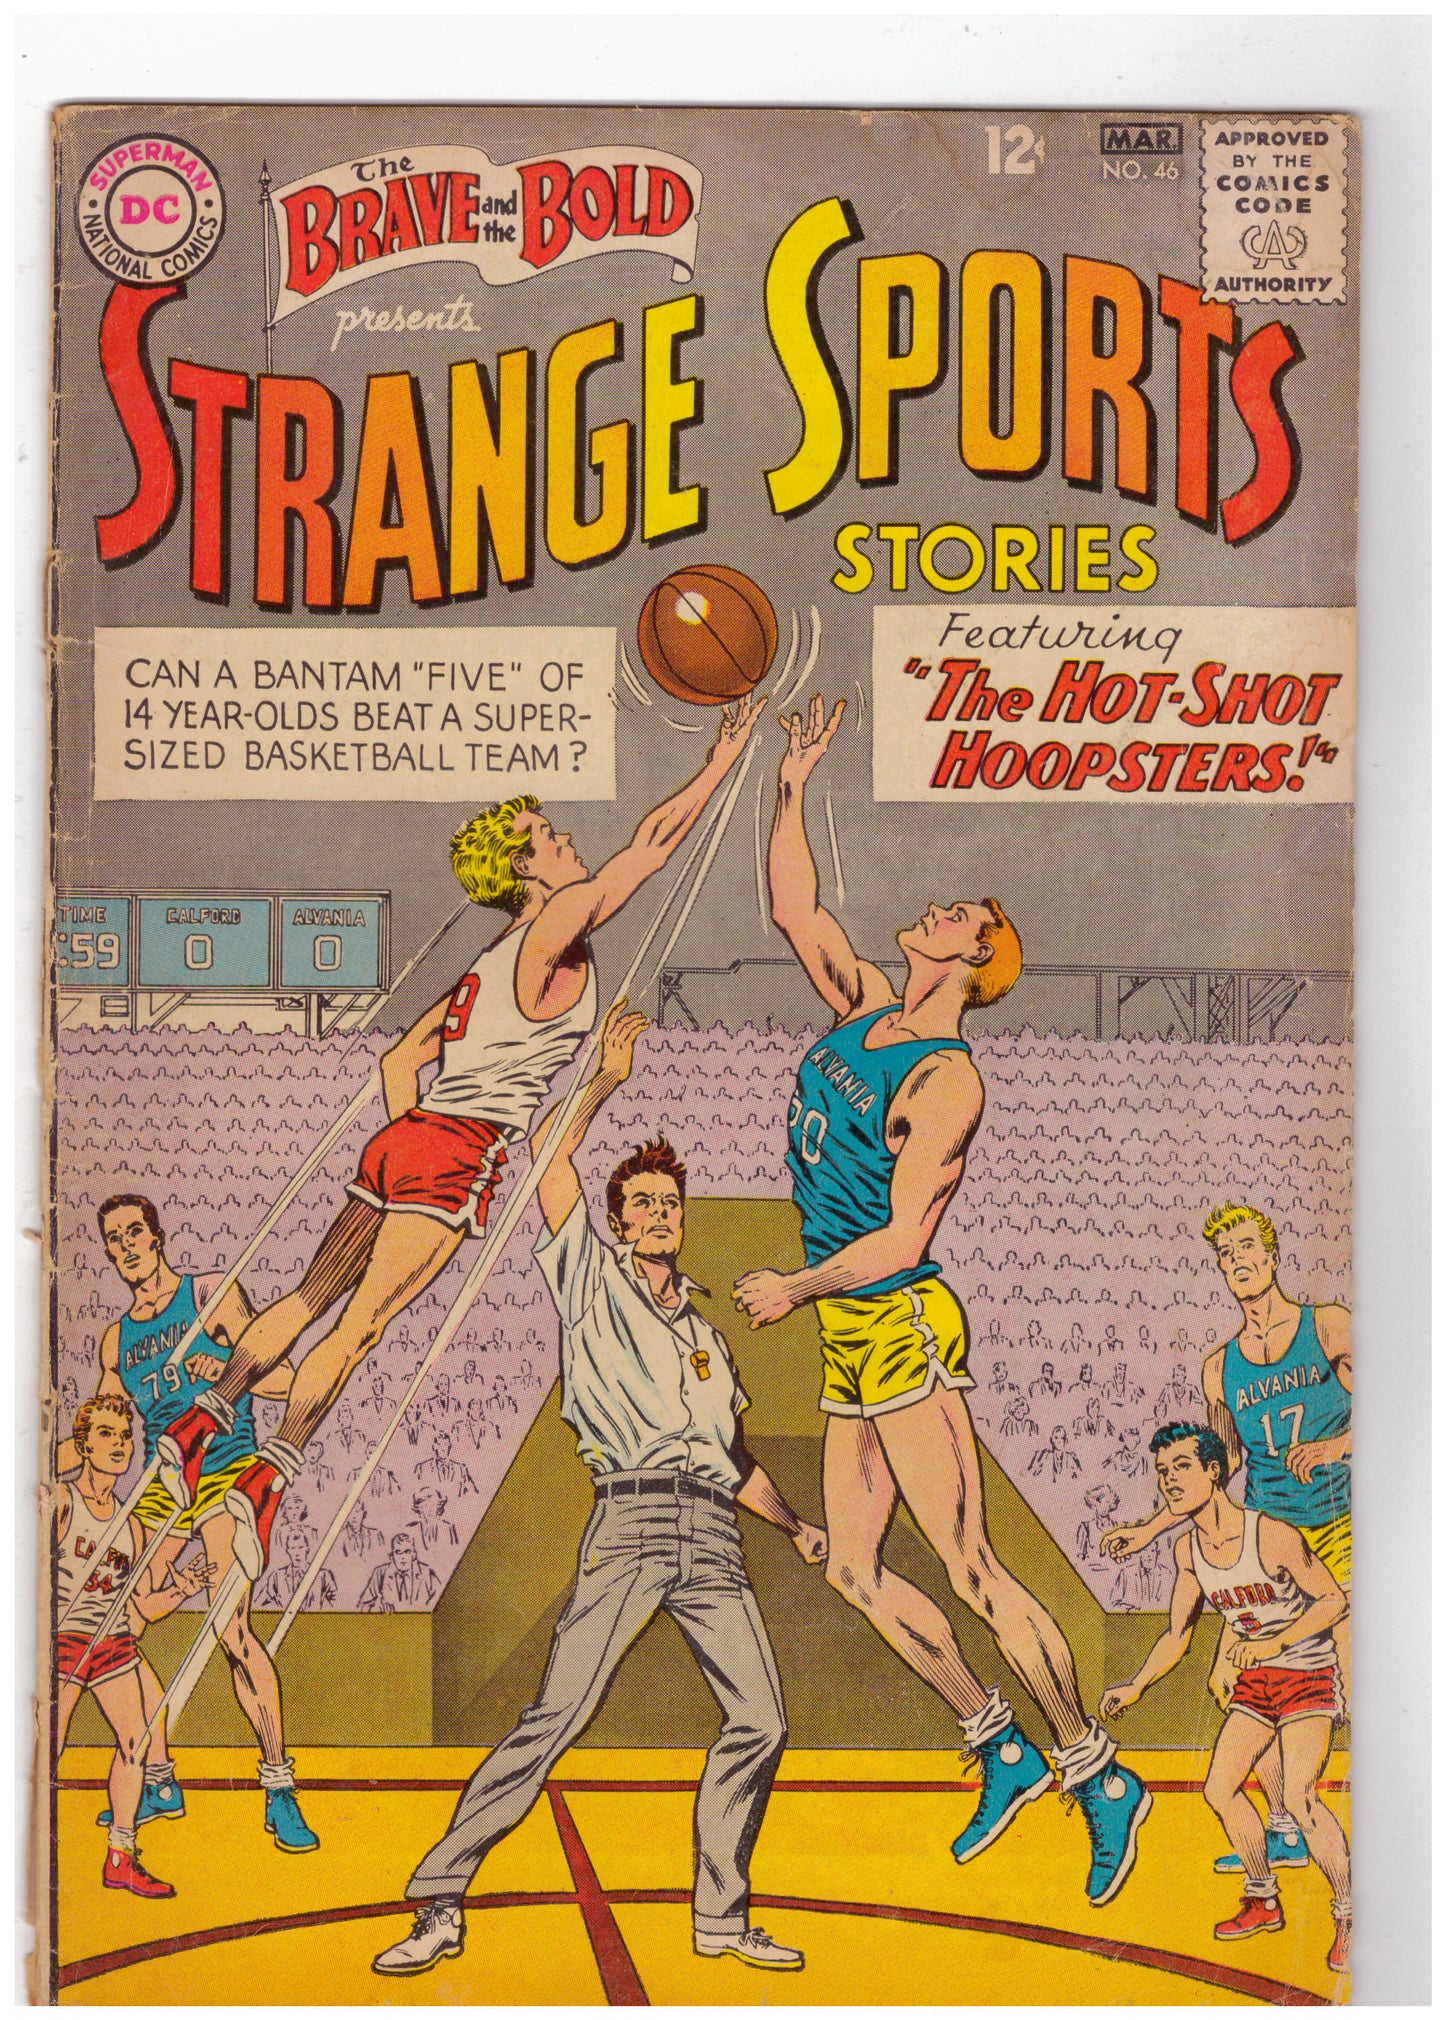 Strange Sports Stories #46